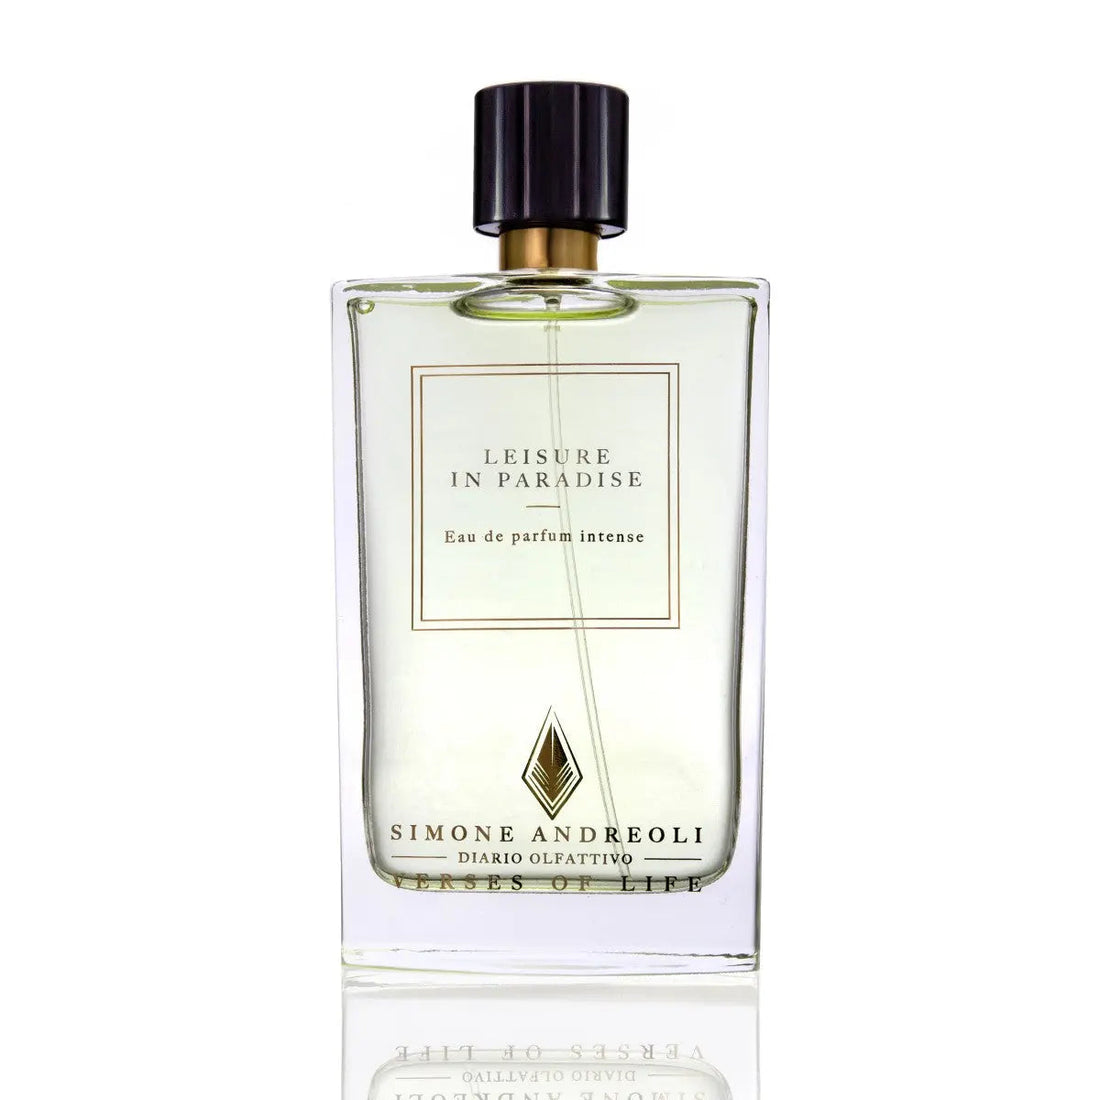 Simone Andreoli Leisure in Paradise eau de Parfum intense - 7,5 ml